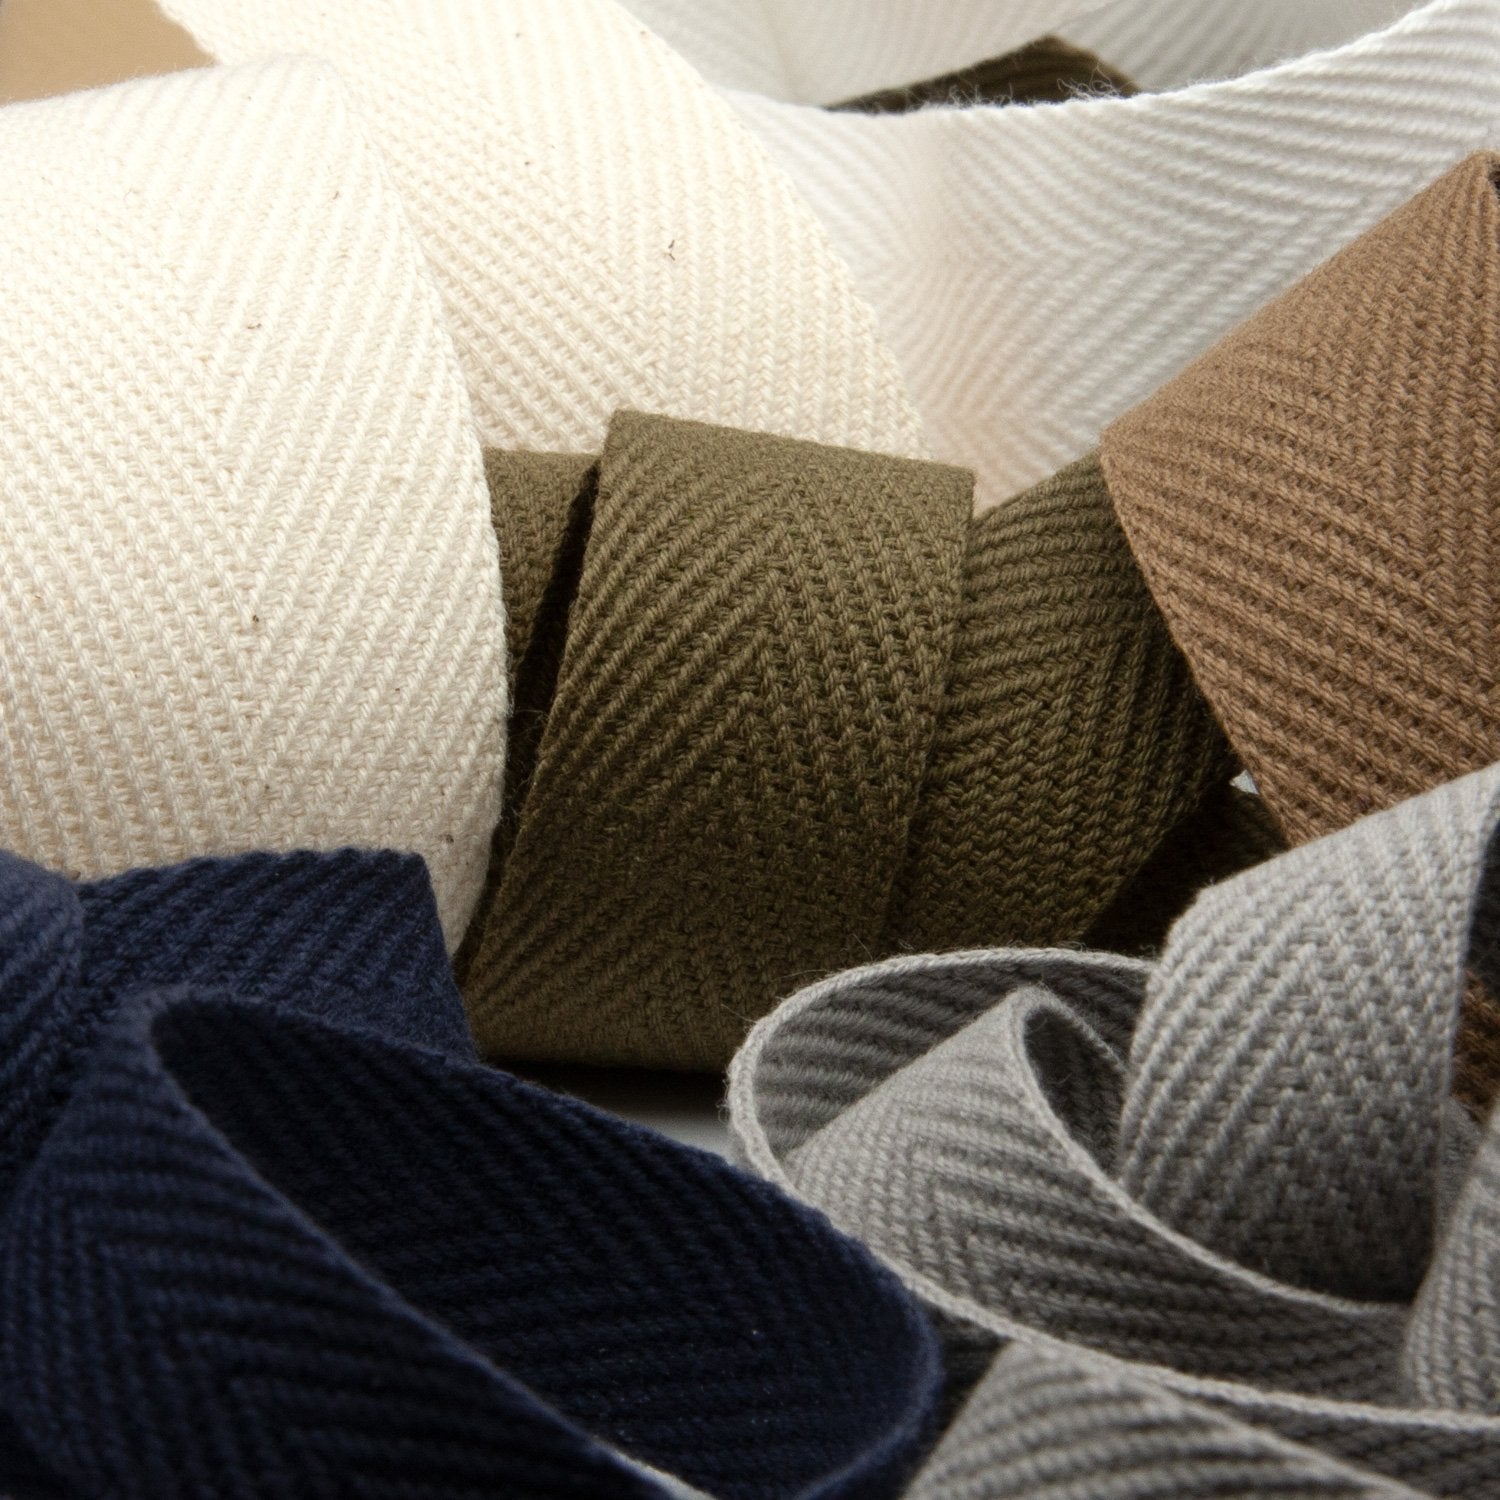 FUJIYAMA RIBBON [Wholesale] Thick Cotton Herringbone Ribbon 15mm 50 Meters Roll White